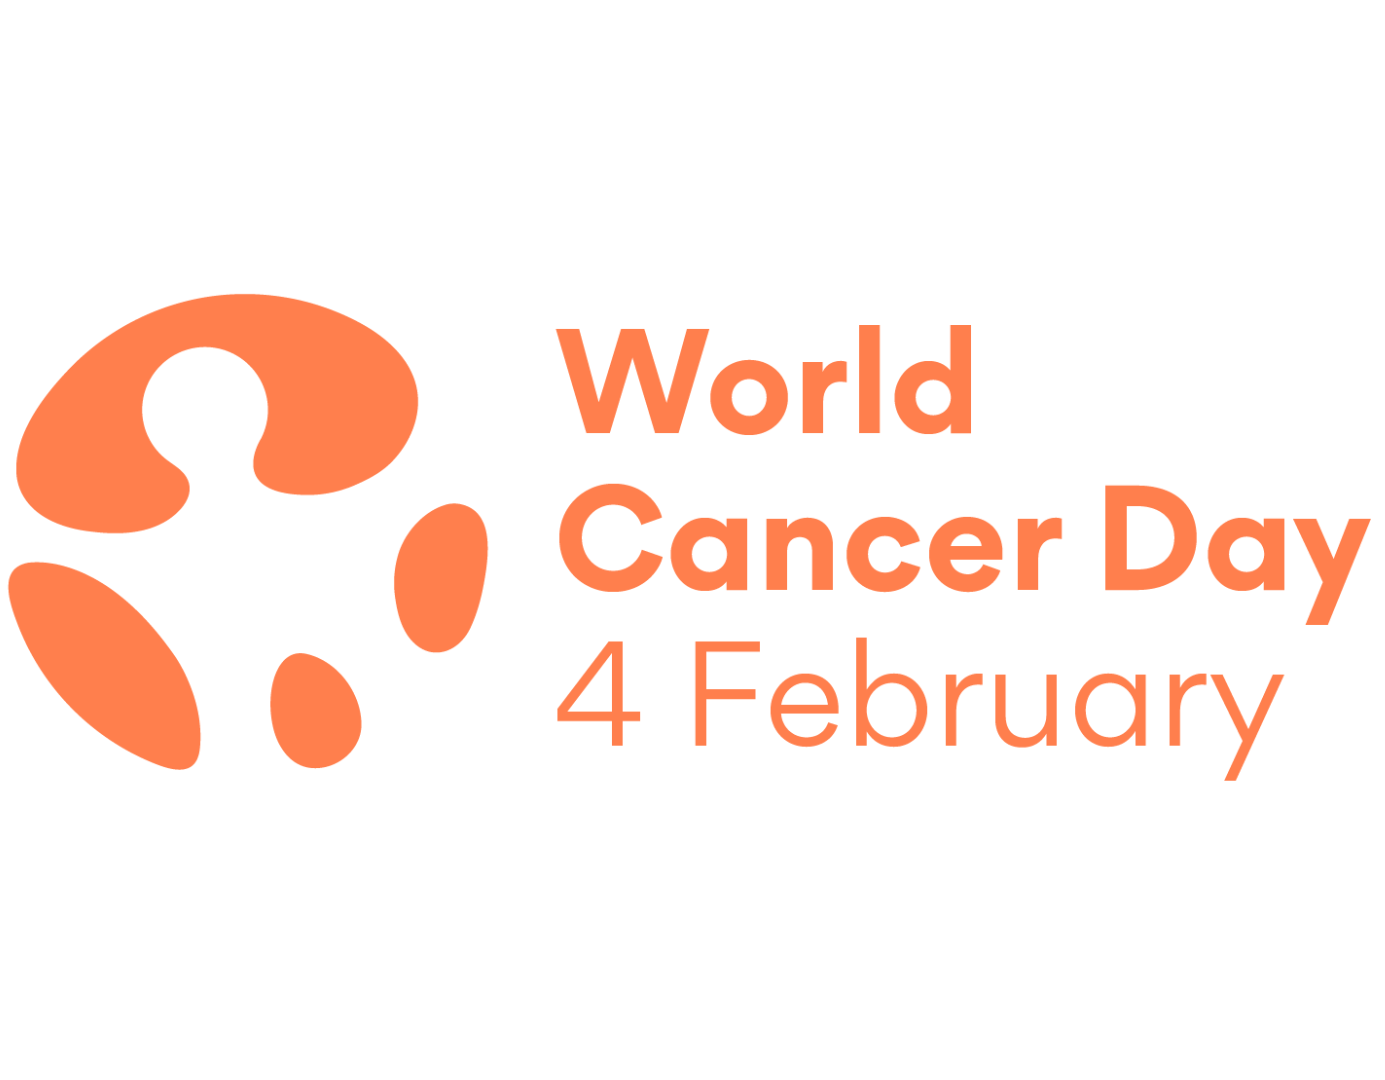 Orange logo with text saying 'World Cancer Day 4 February'